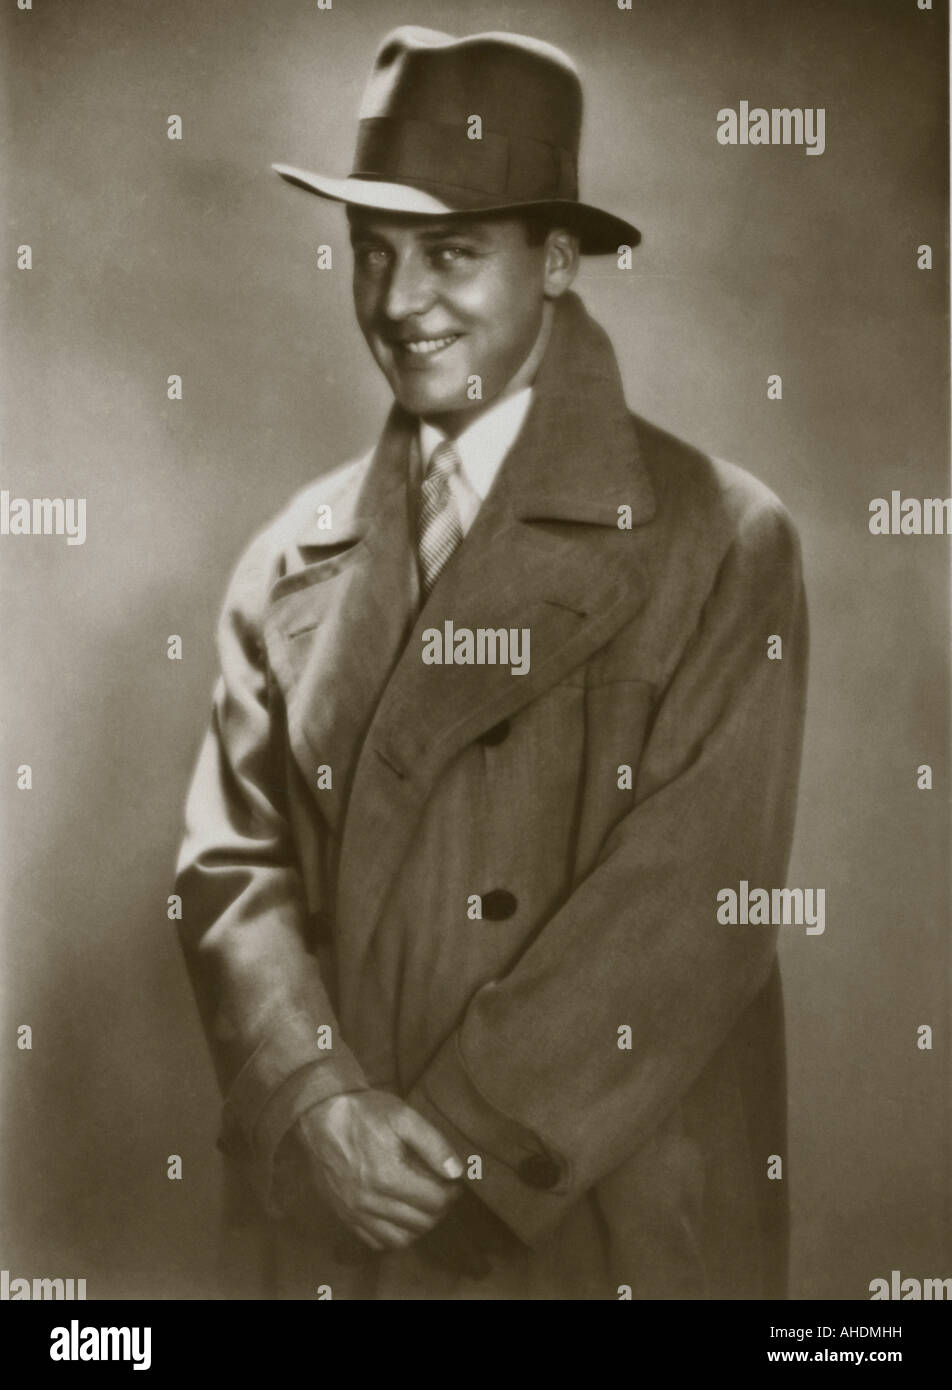 people, man, half length, circa 1930s, 20th century, historic, historical, fashion, hat, coat, nostalgia, nostalgic, Stock Photo